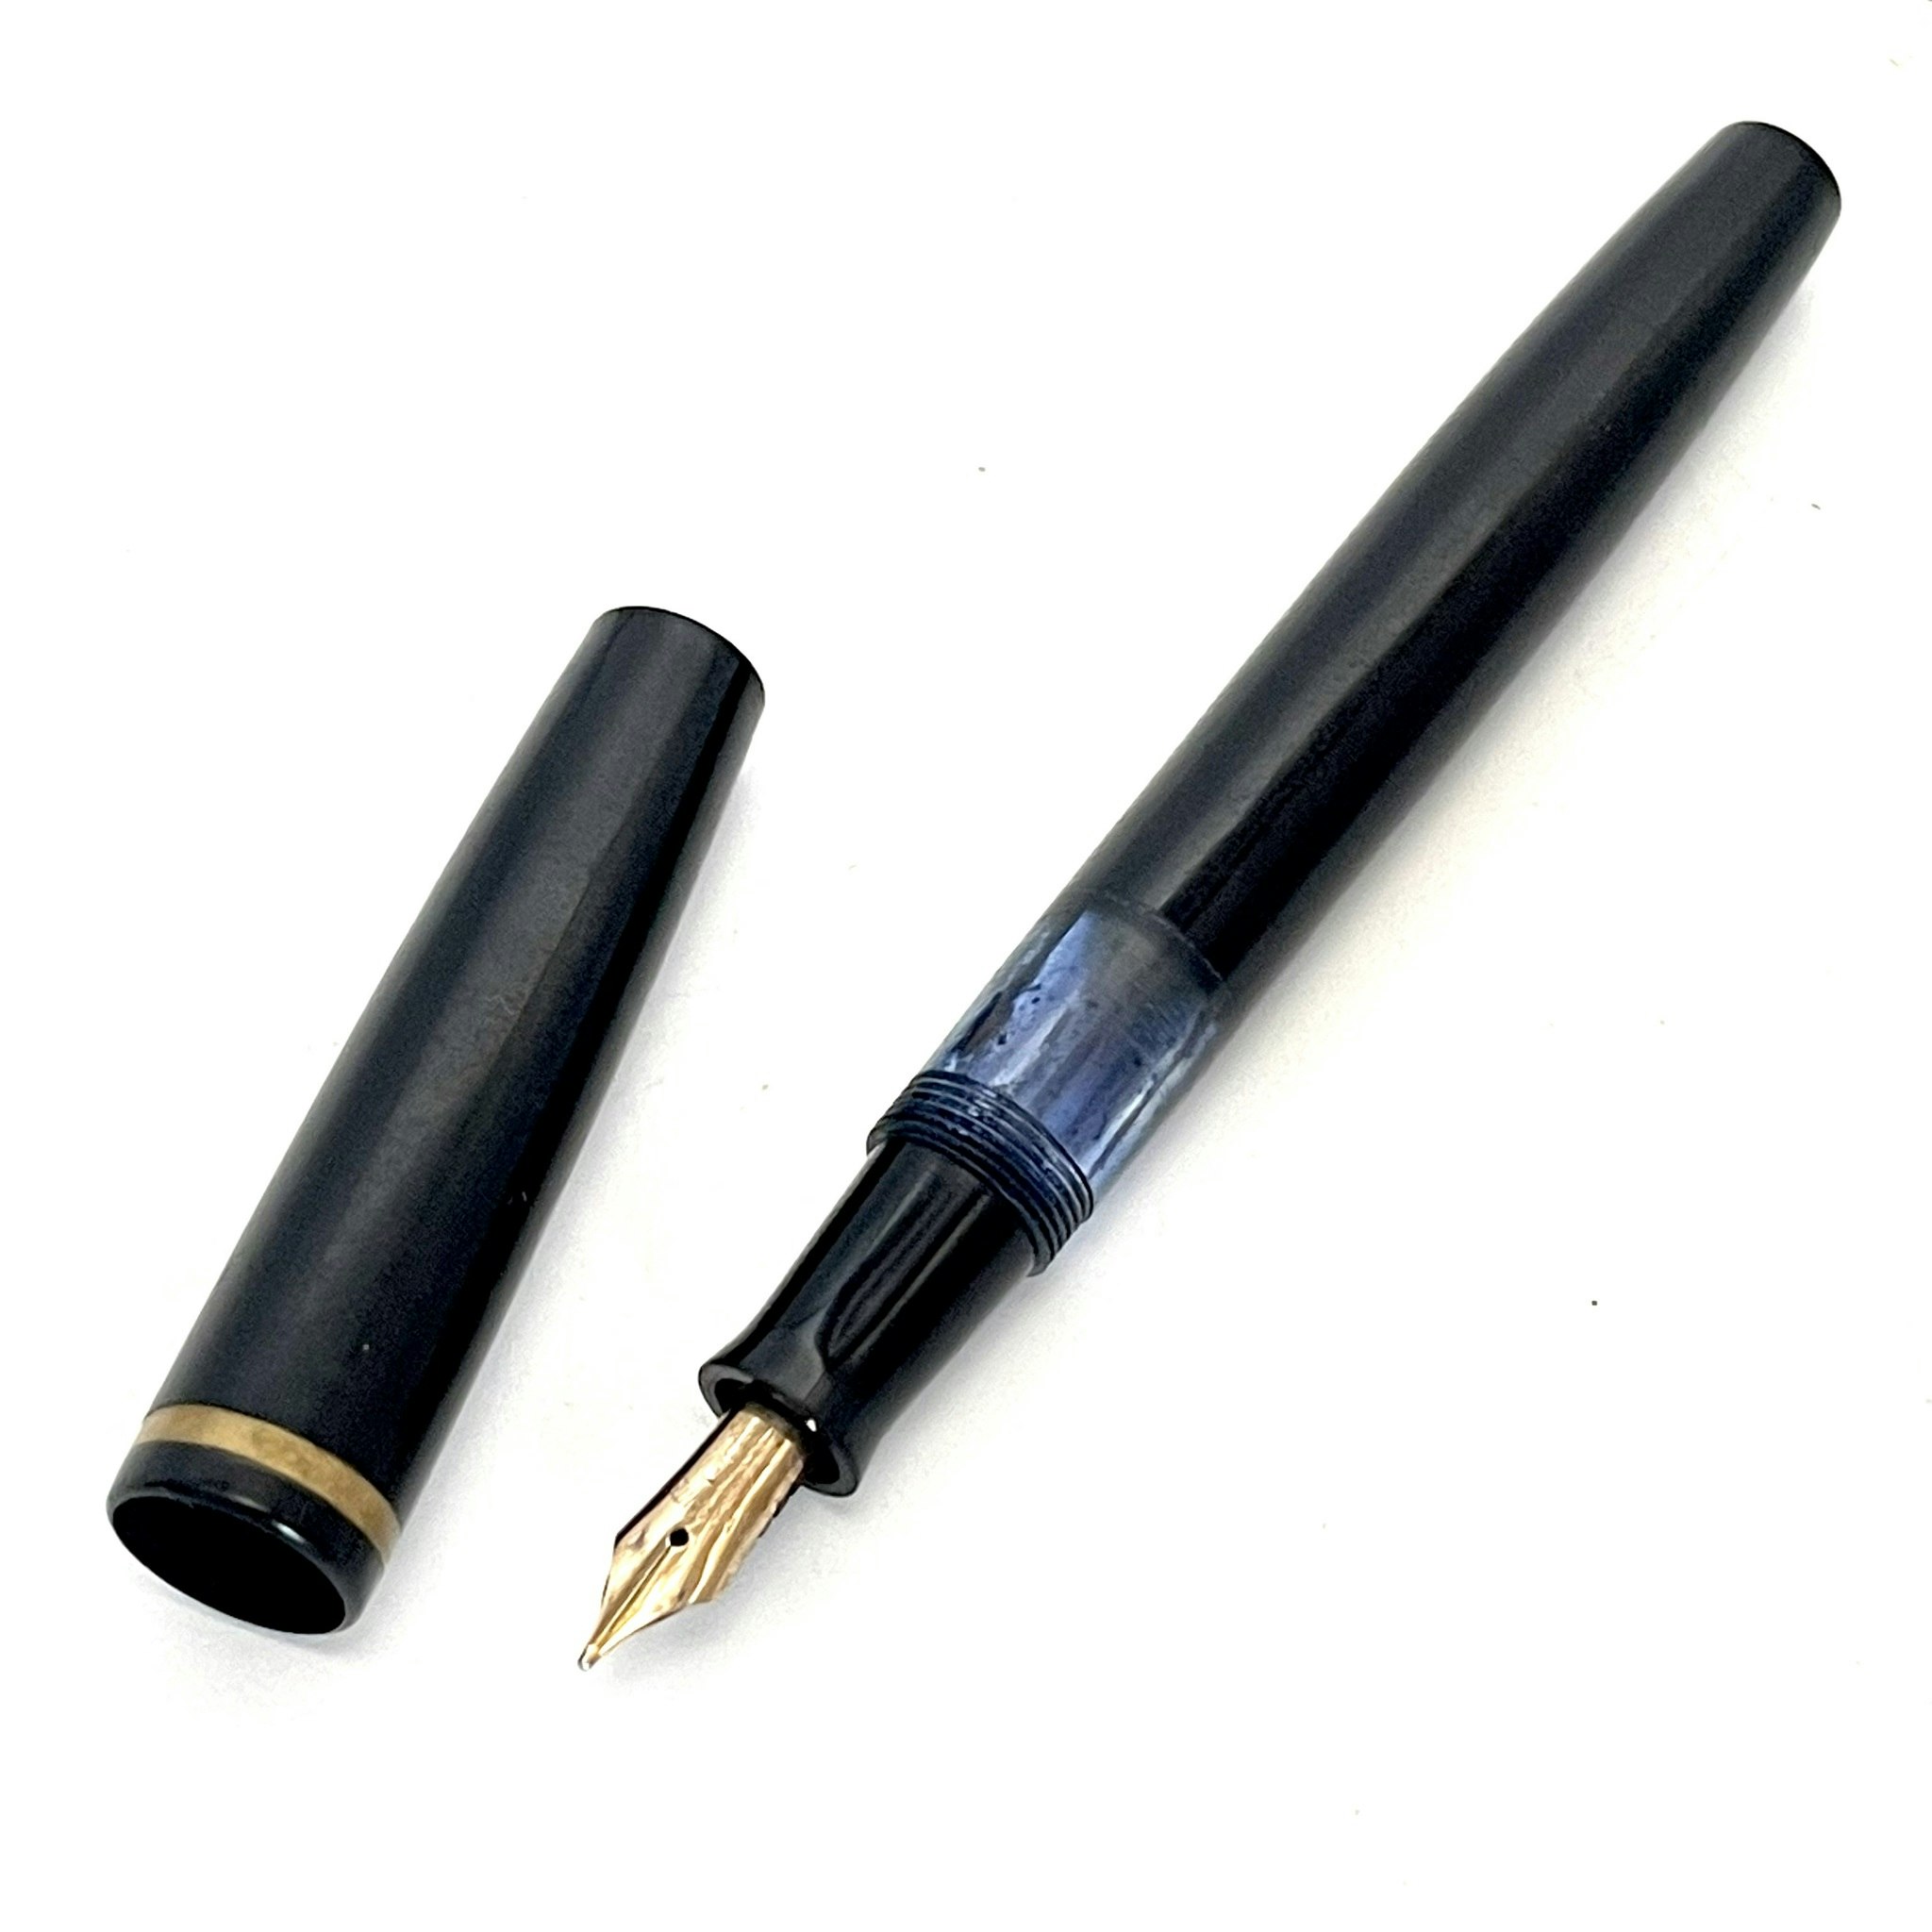 Warranted 14k nib, Reservoir pen